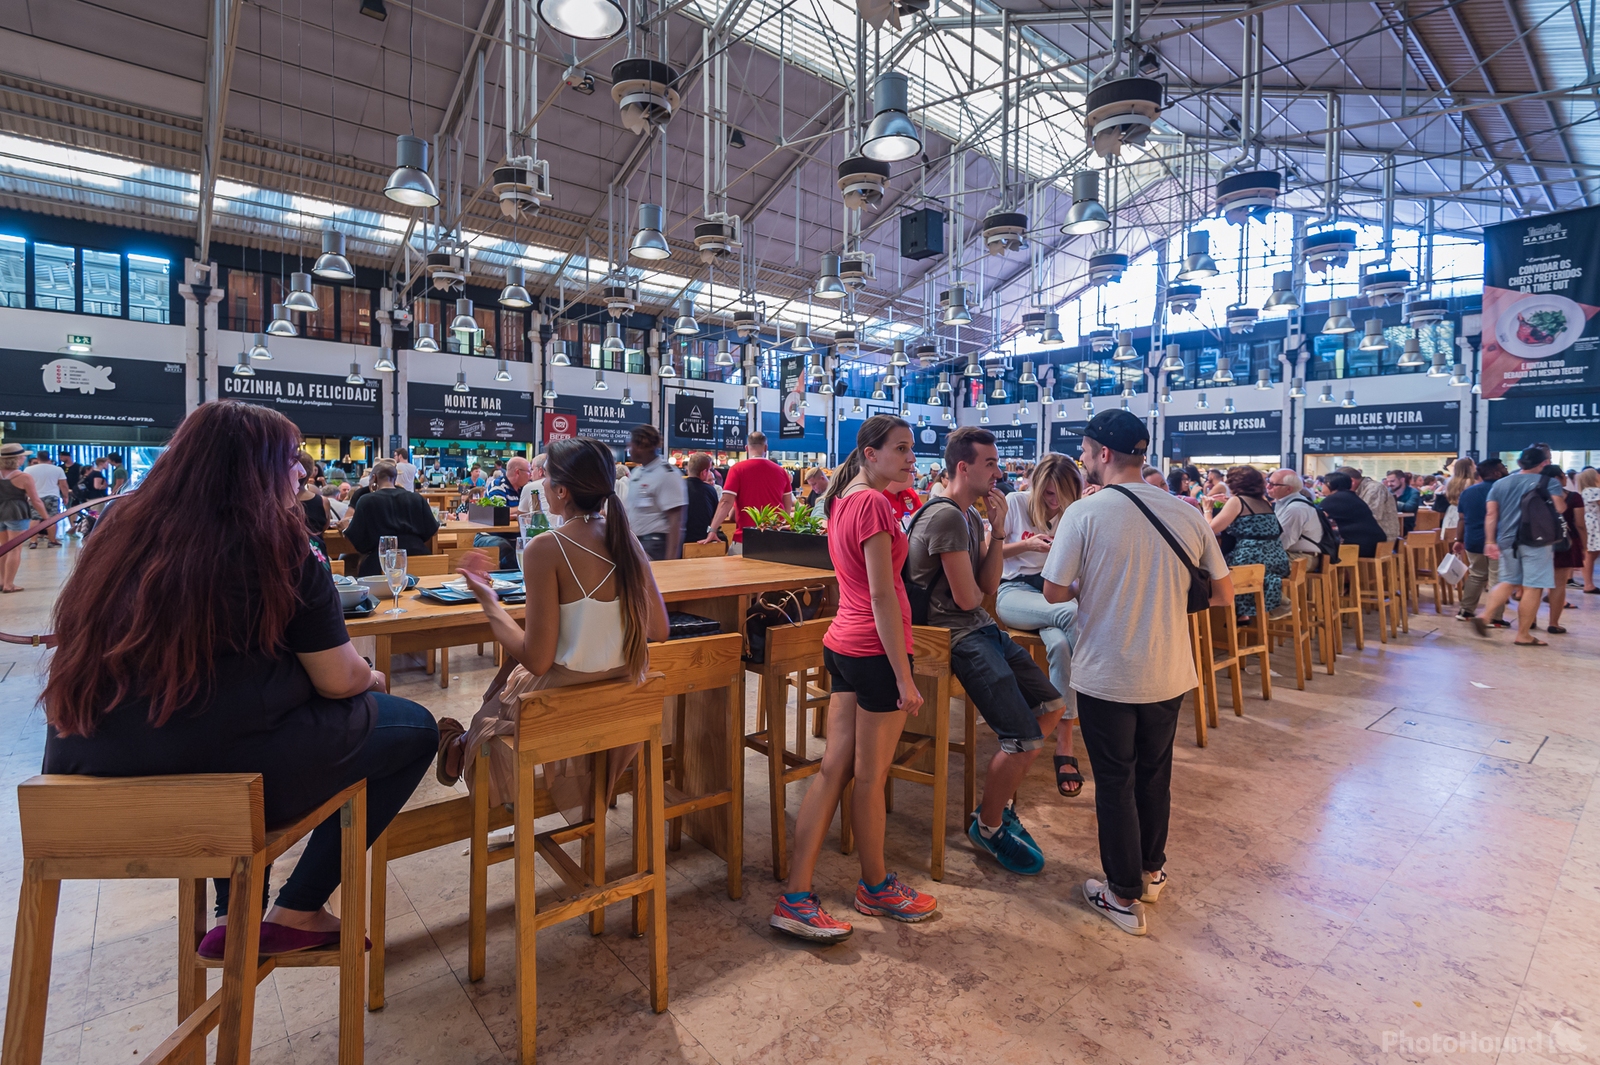 Image of Mercado da Ribeira by Sue Wolfe